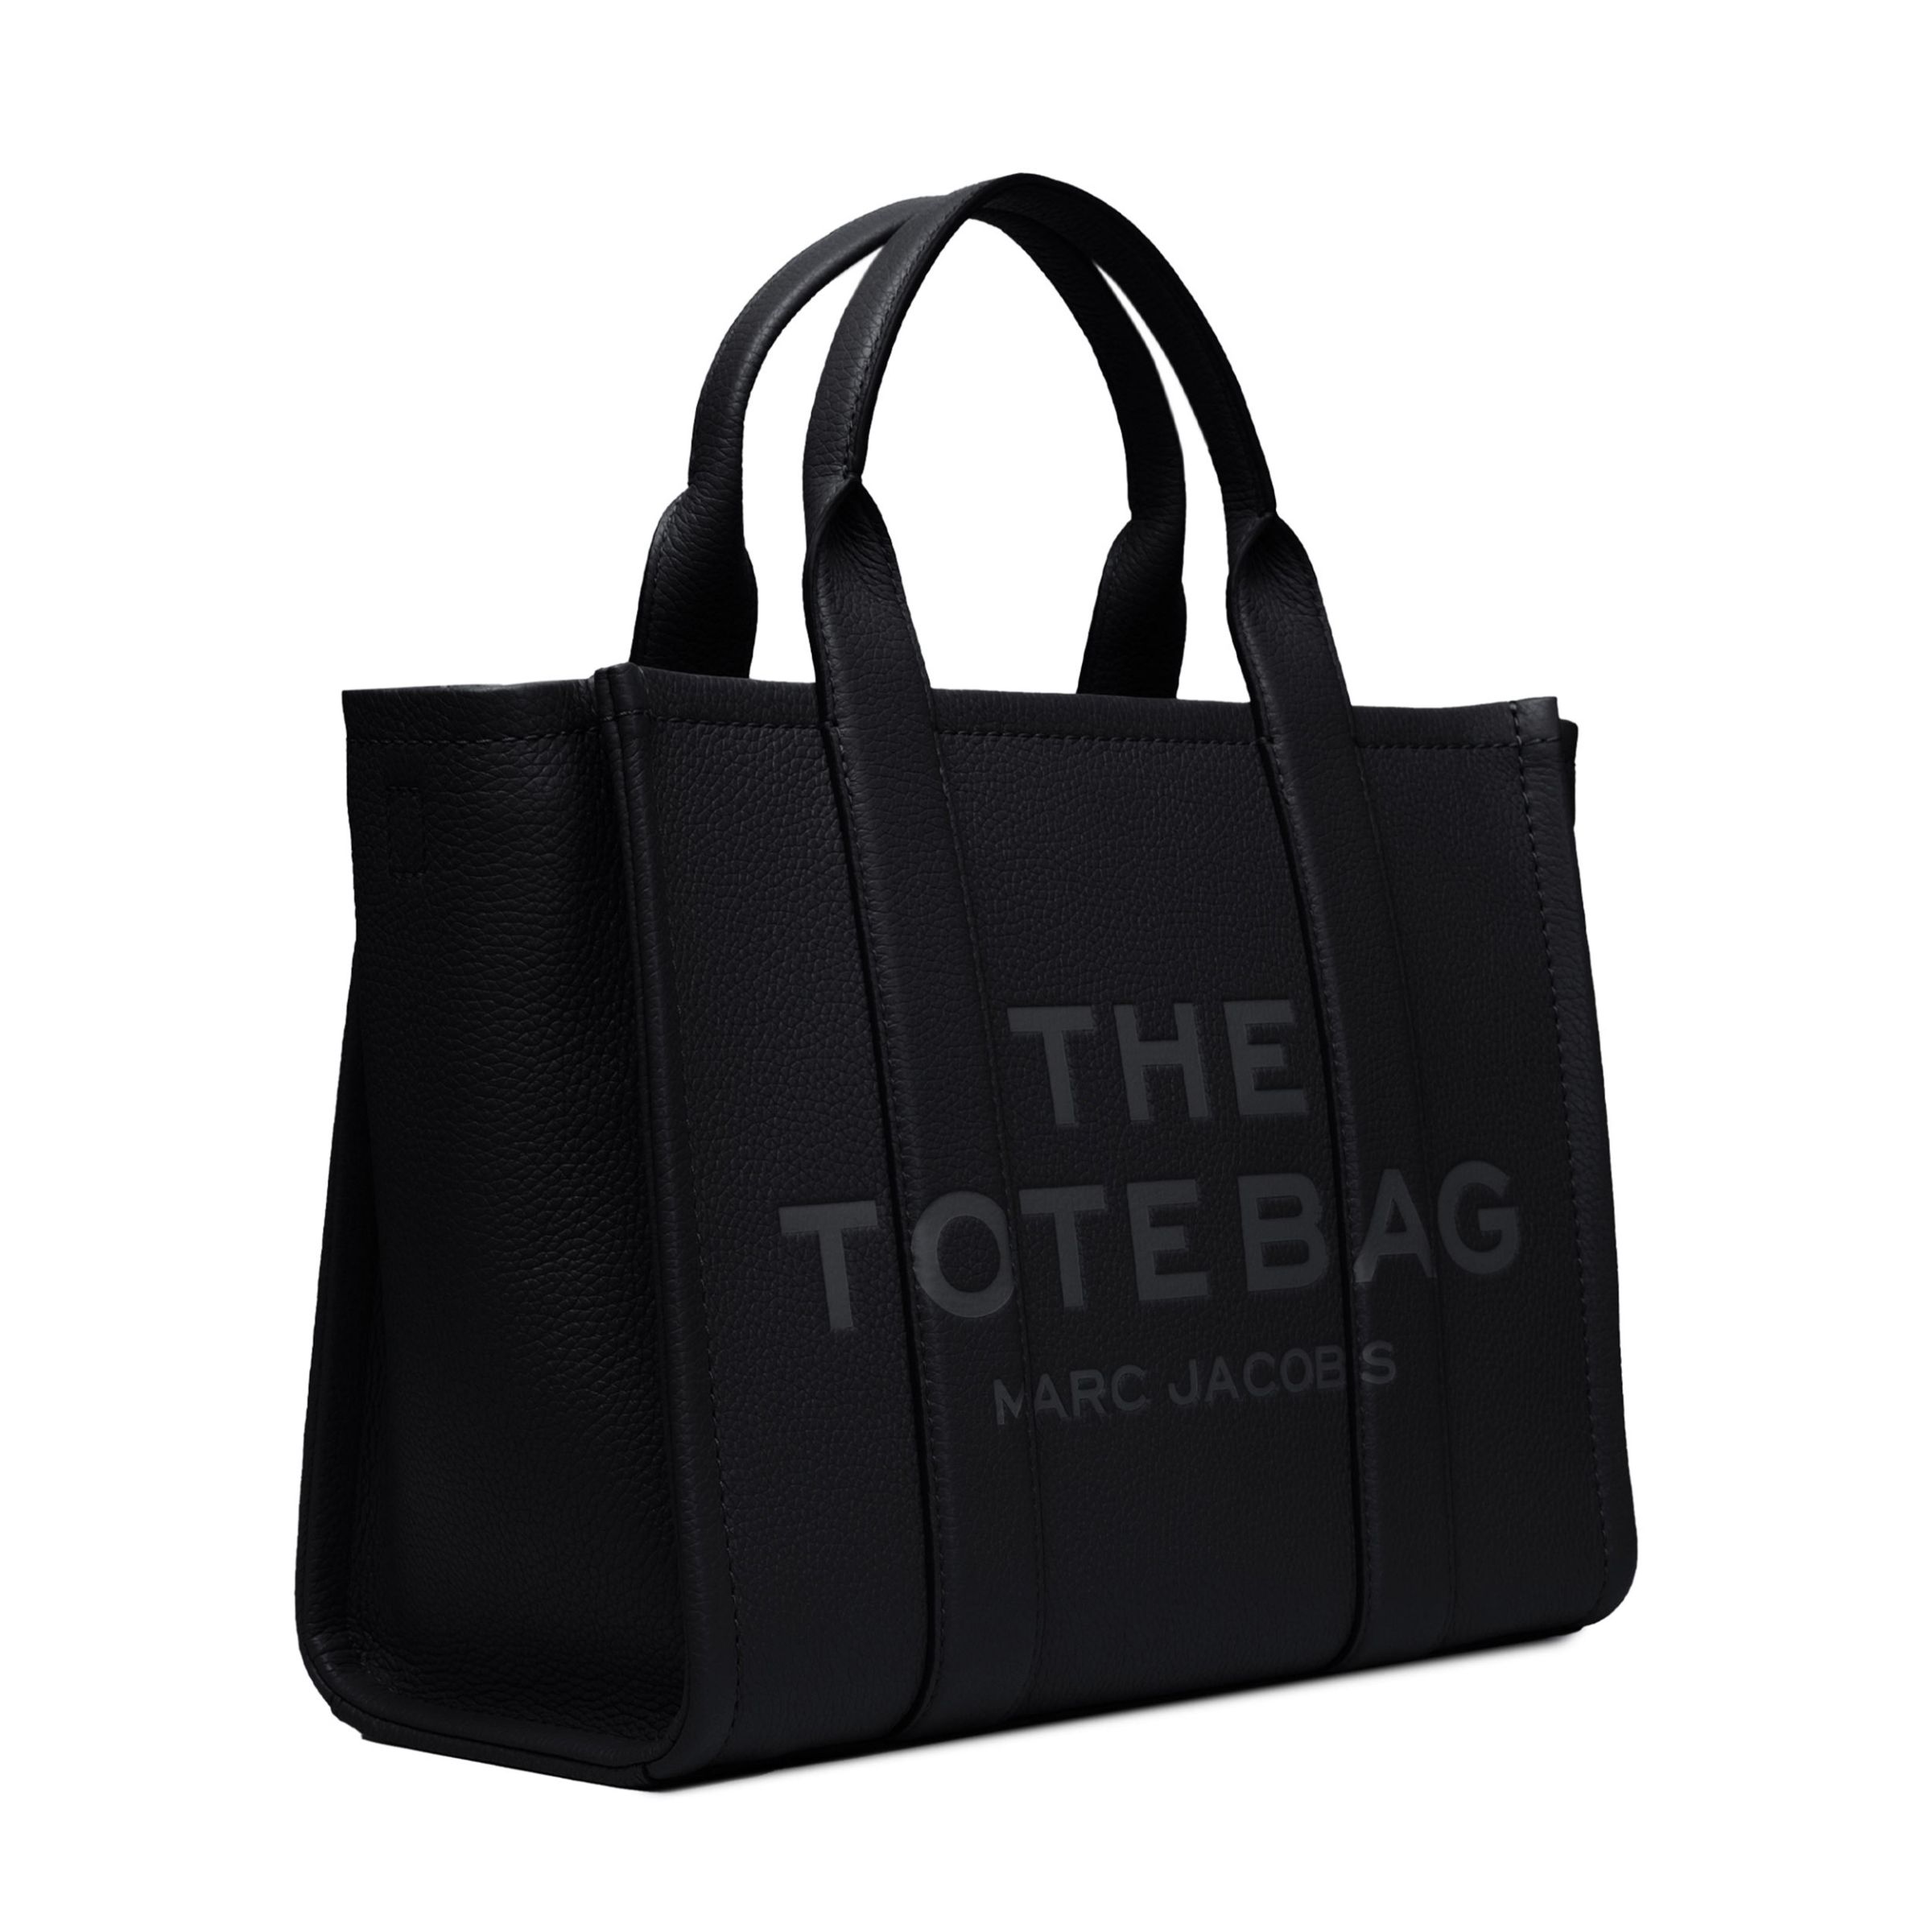 Сумка Marc Jacobs Small Tote Bag черная